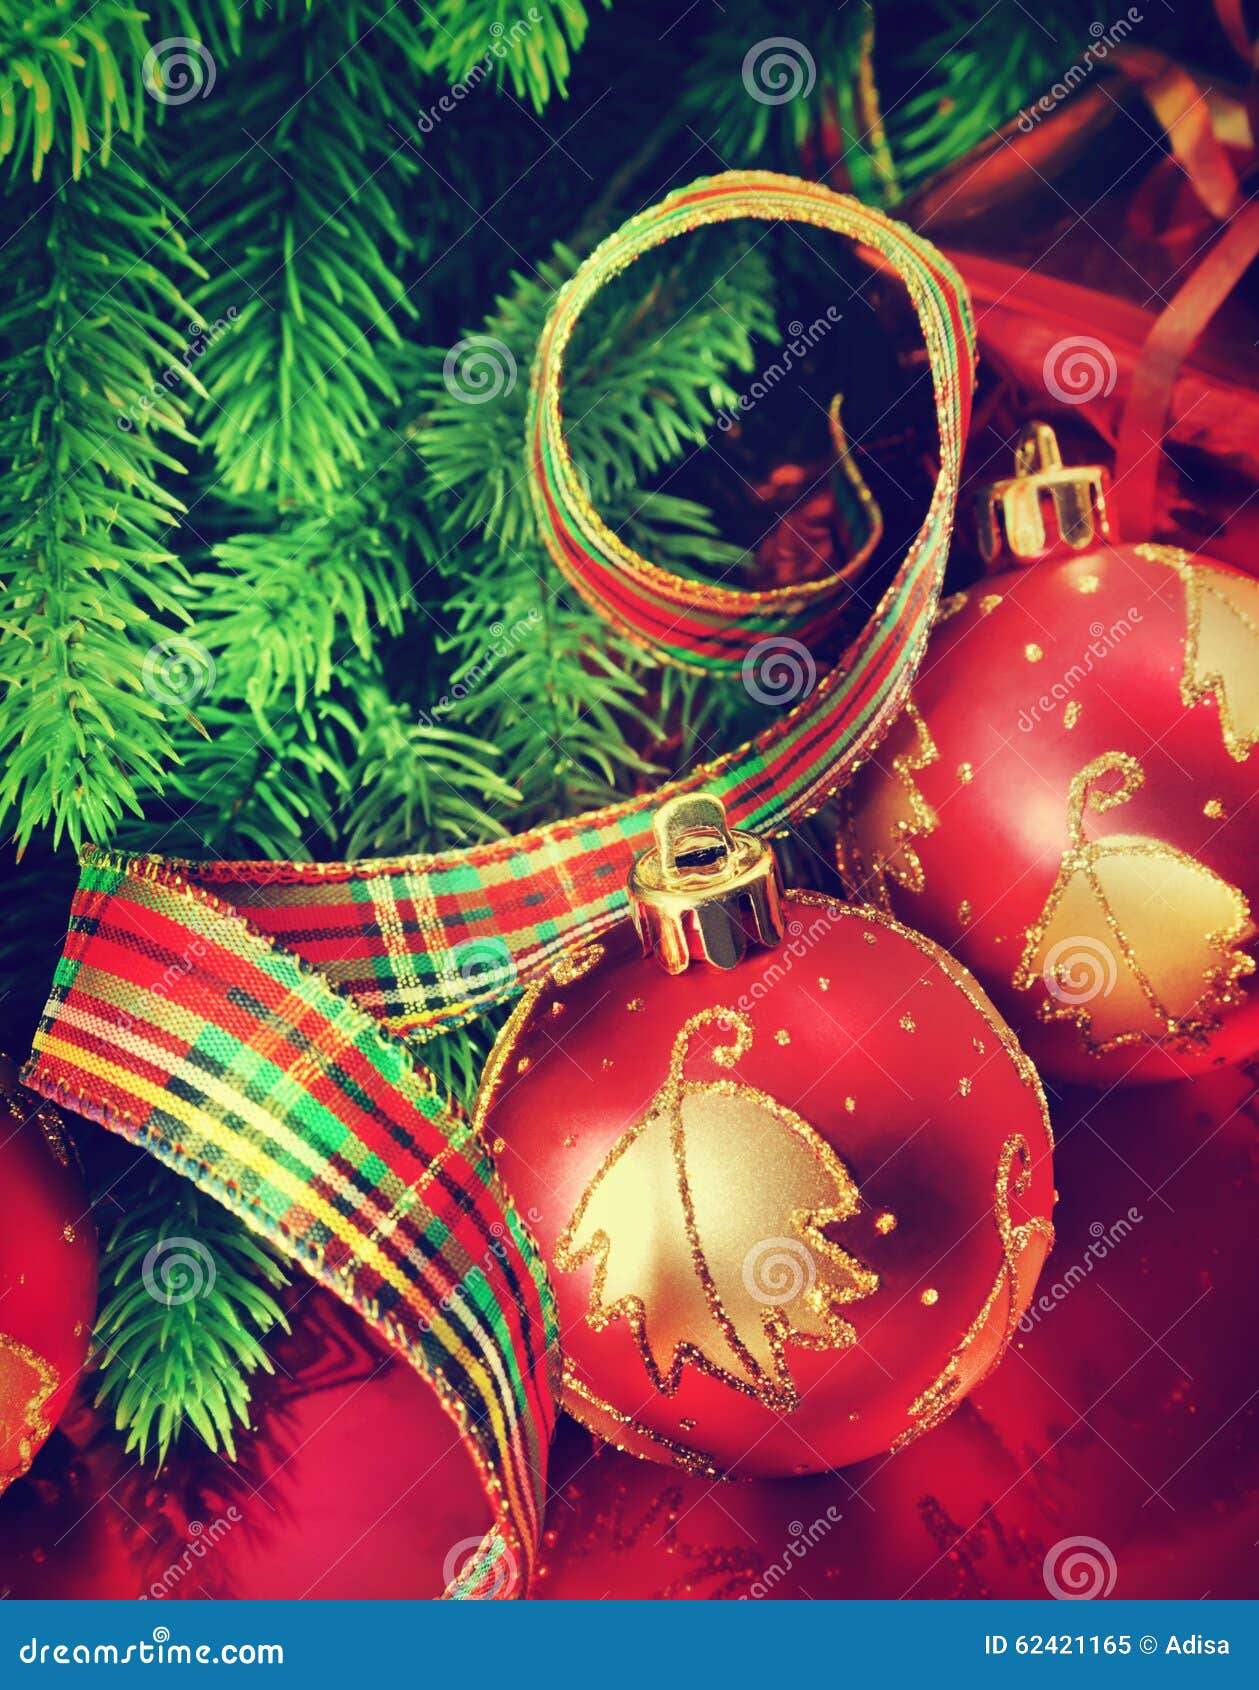 Christmas ornament stock image. Image of closeup, decorative - 62421165